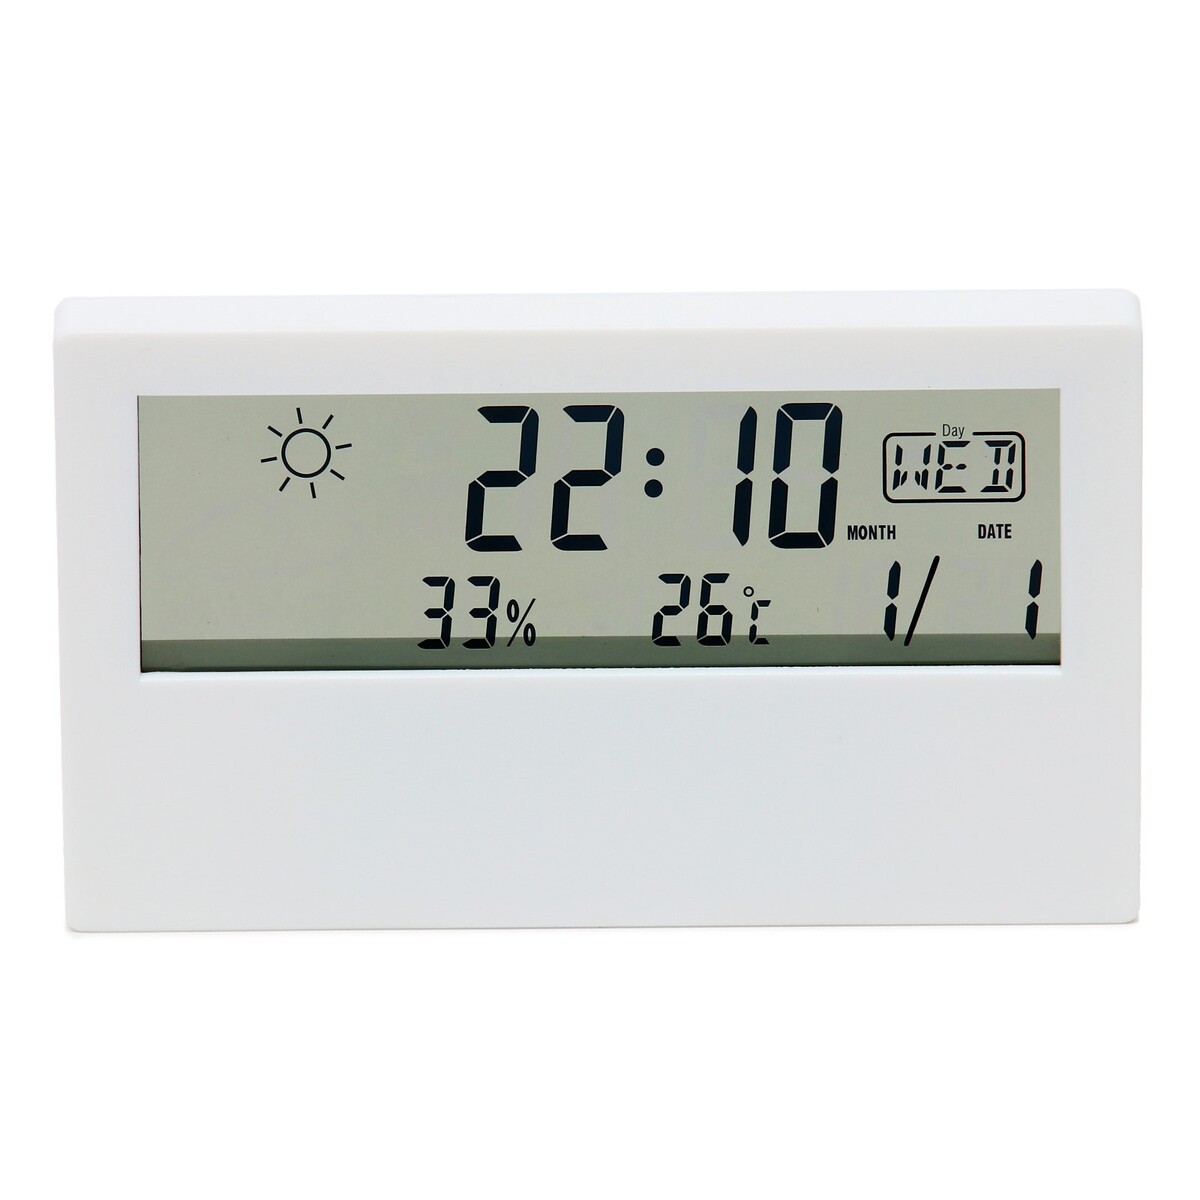 Часы настольные электронные: будильник, термометр, календарь, гигрометр, 13.3х7.4 см, белые часы настольные электронные будильник термометр календарь зеленые цифры 17х9 5х4 2 см